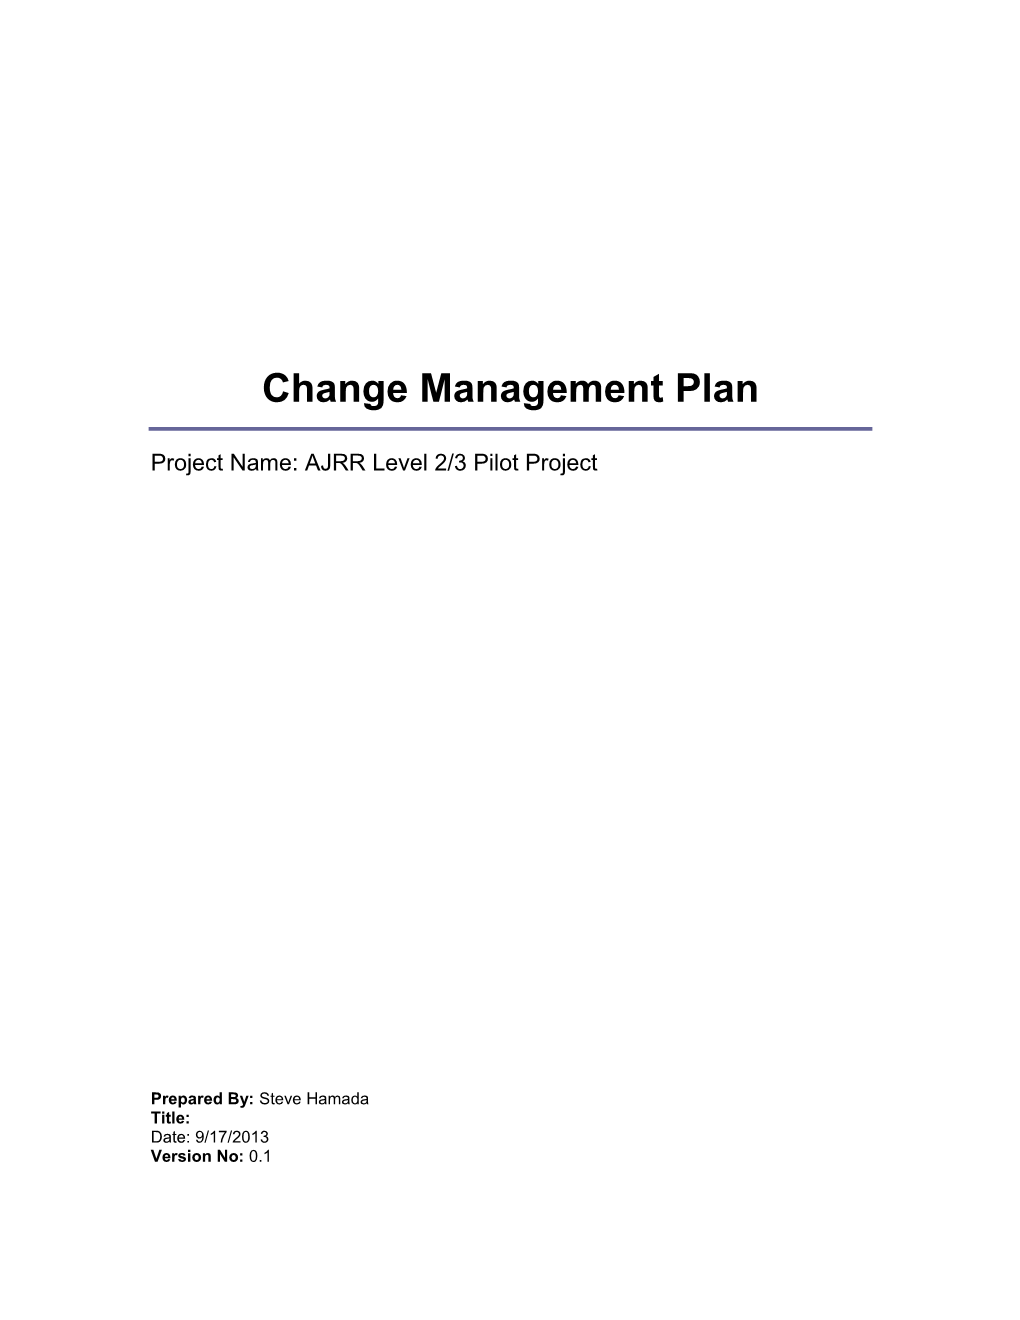 Change Management Plan s1